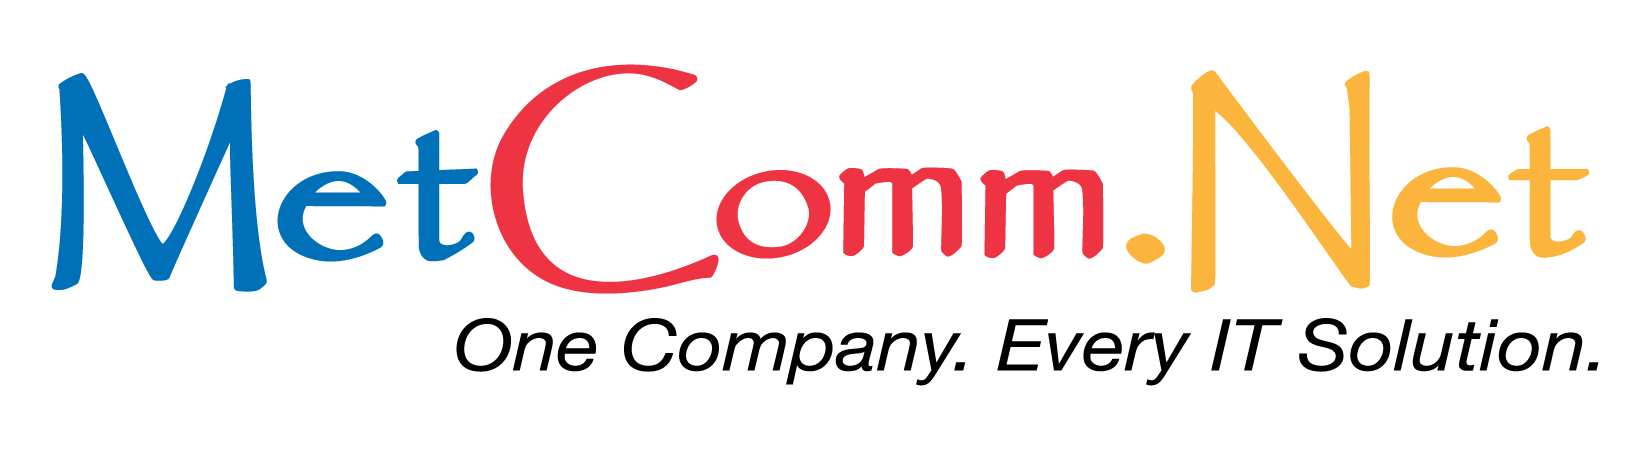 MetComm.Net, LLC Logo